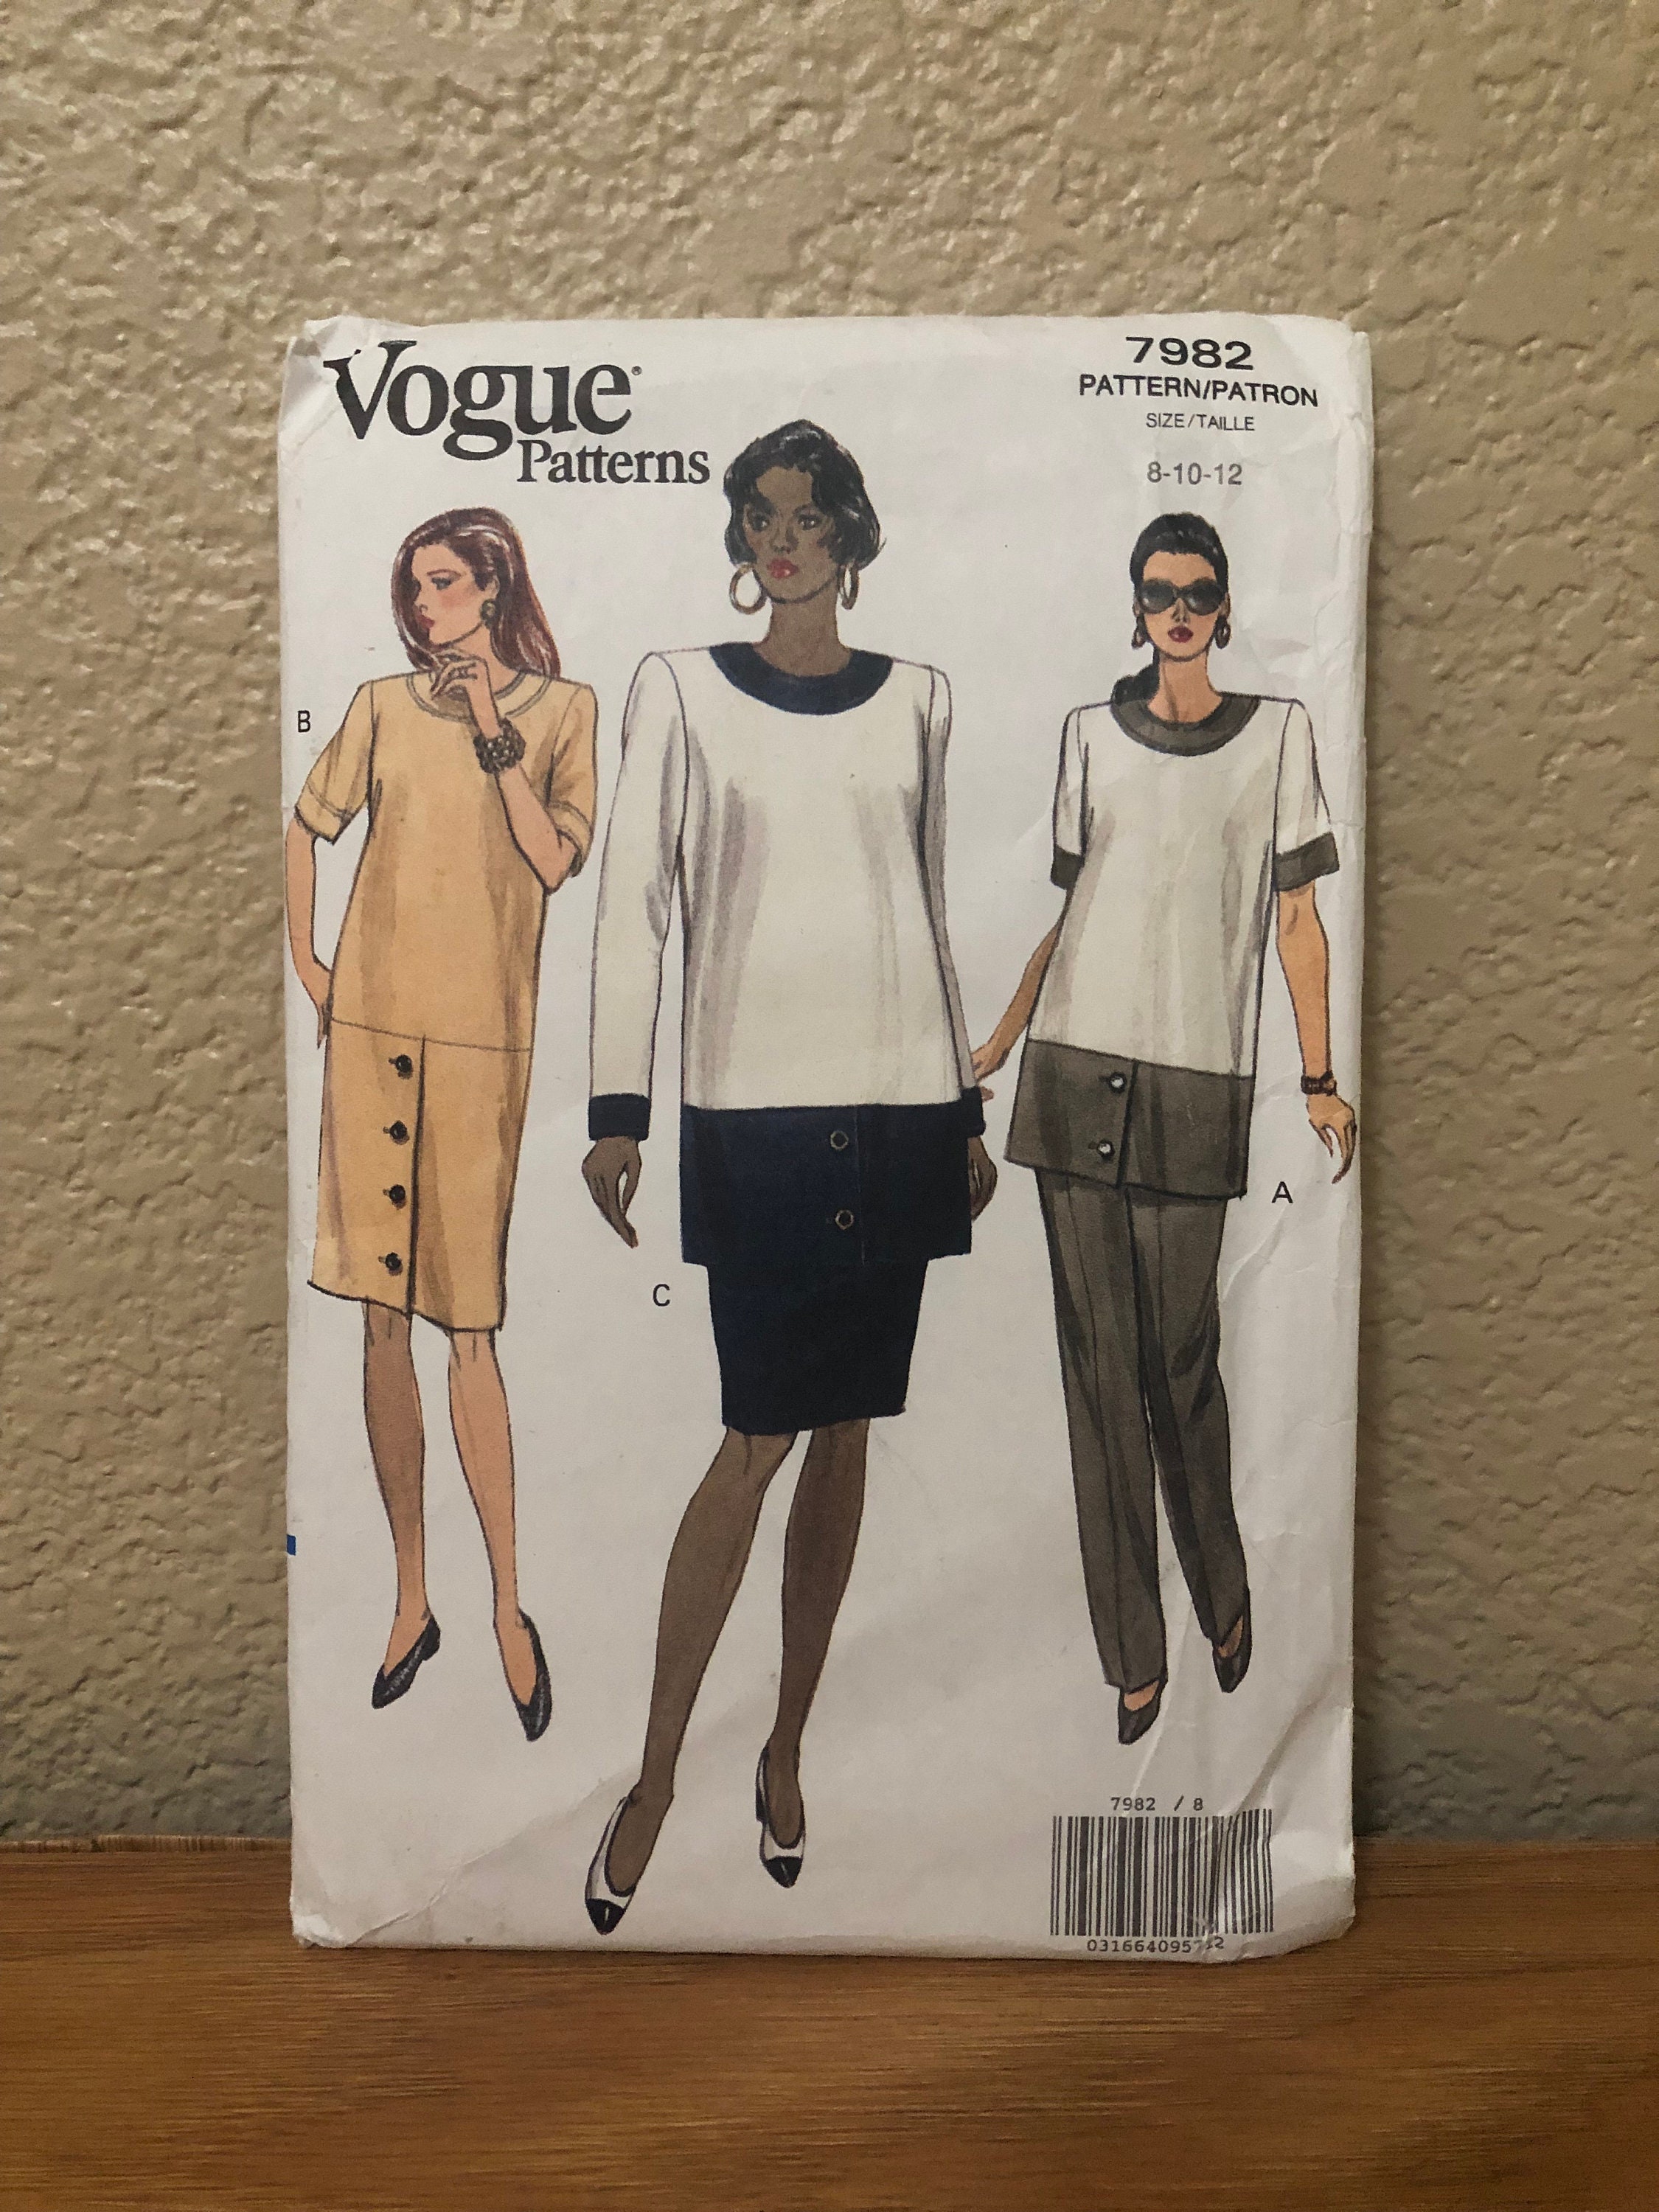 Vogue Patterns 7982 Hermes Birkin bag sewing pattern